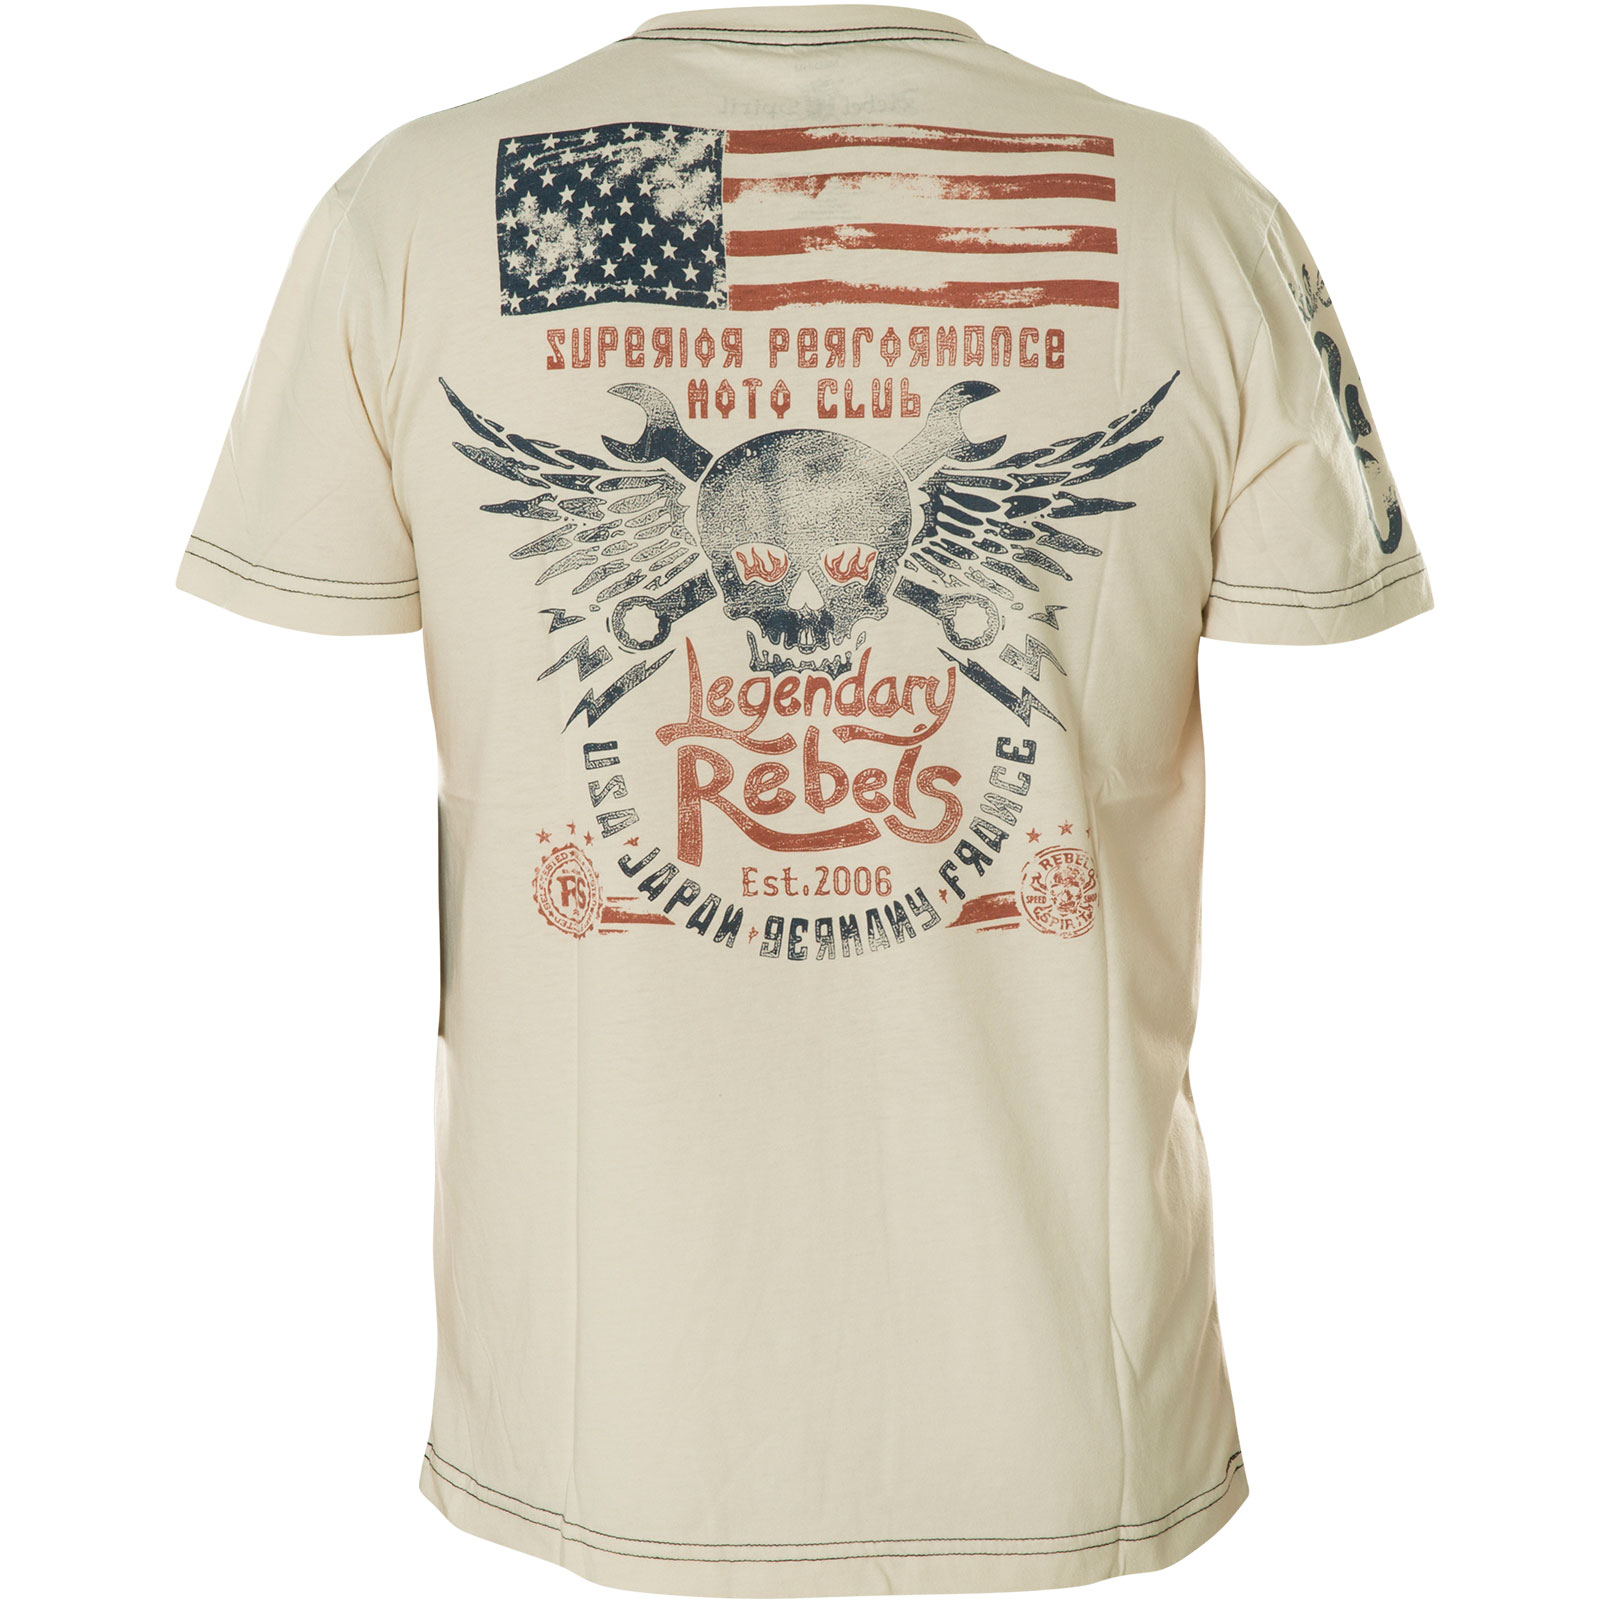 Rebel Spirit T-Shirt RSSK161815 with a large skull and U.S. flag